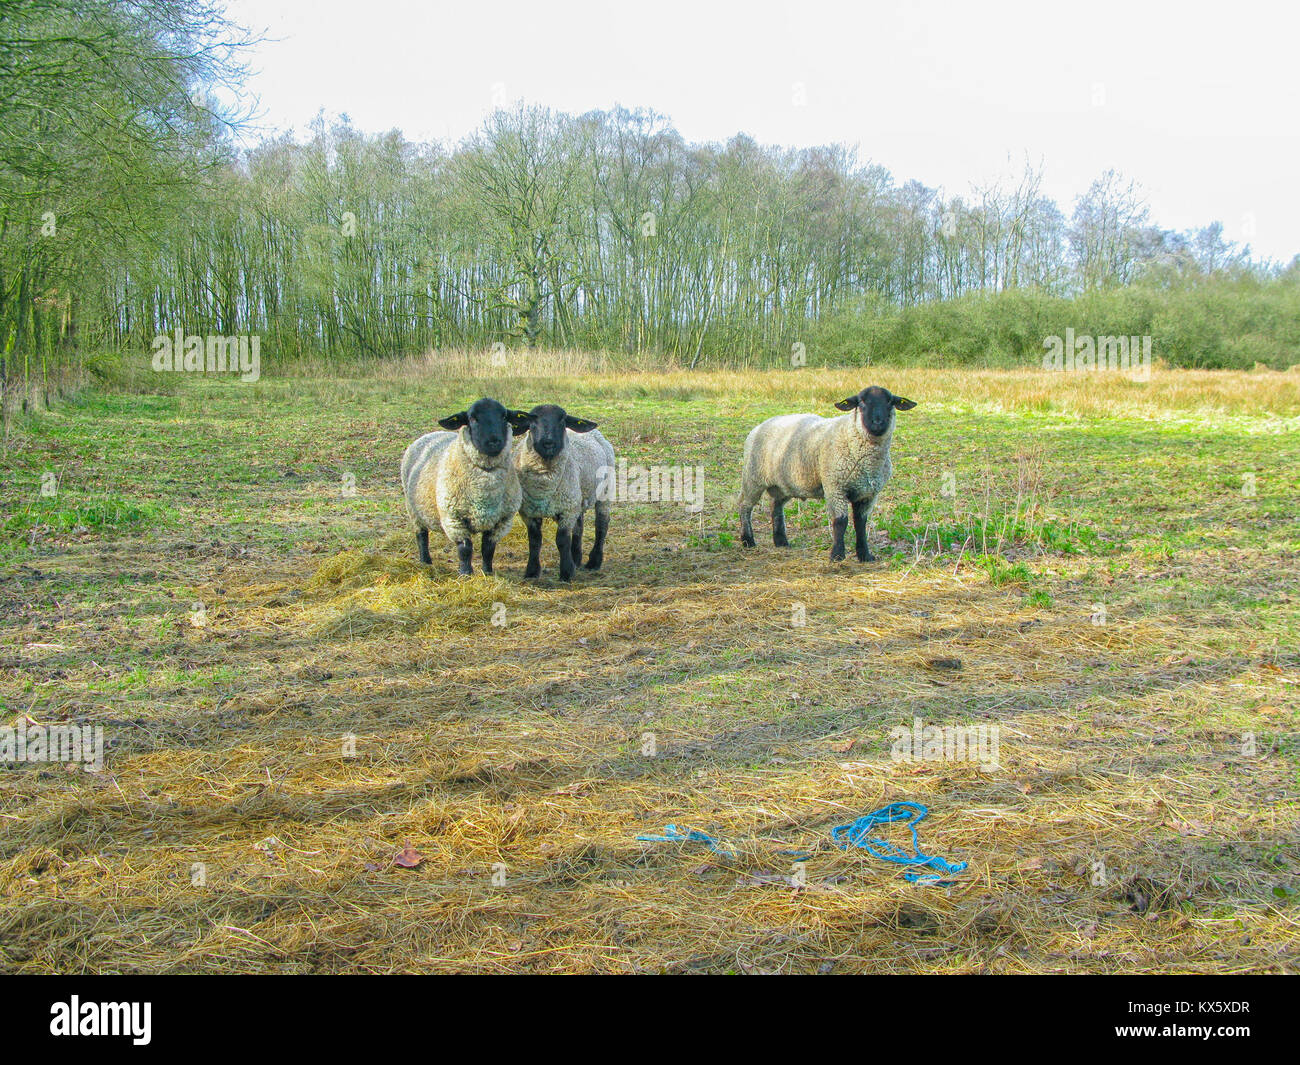 Three inquisitive suffolk sheep on grass Stock Photo